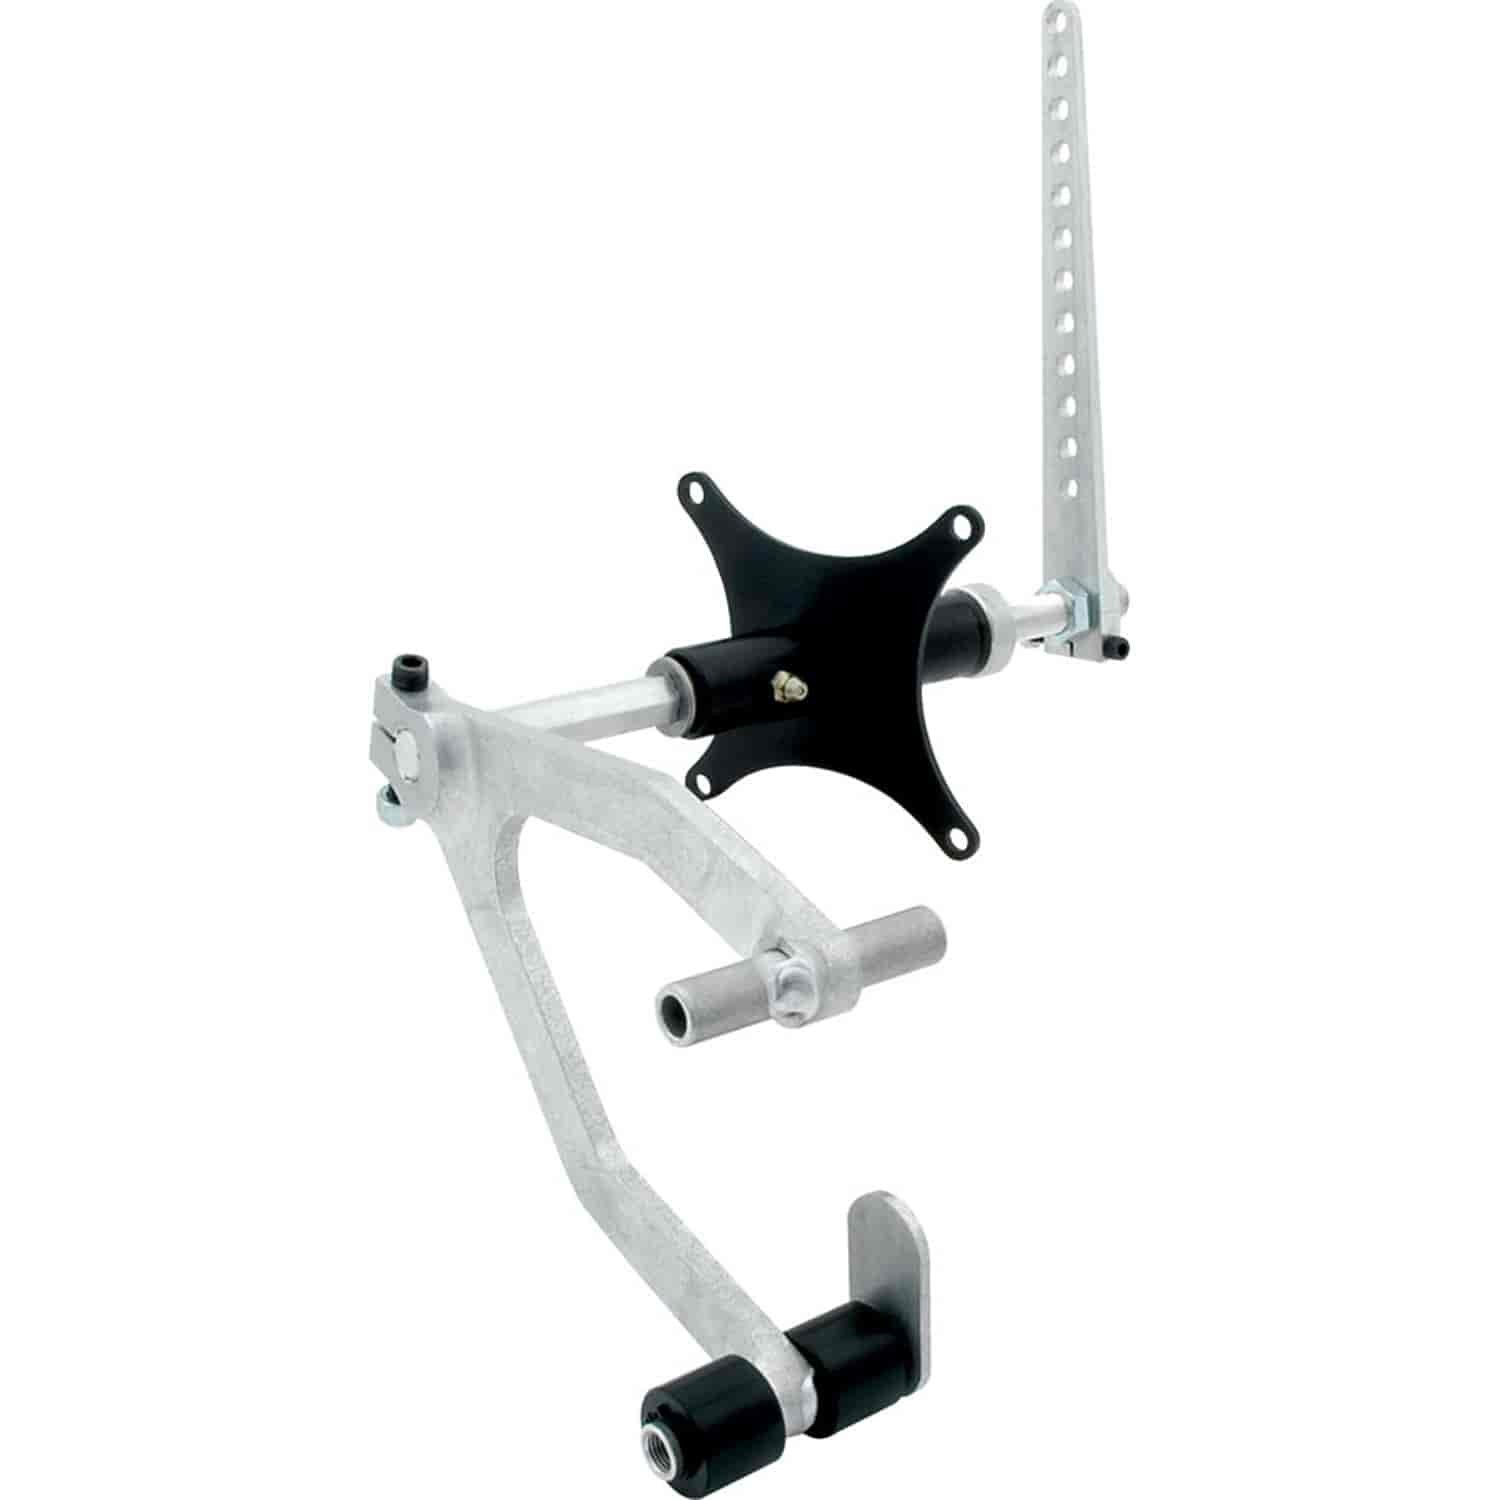 Adjustable Gas Pedal Angled Foot Box Pedal